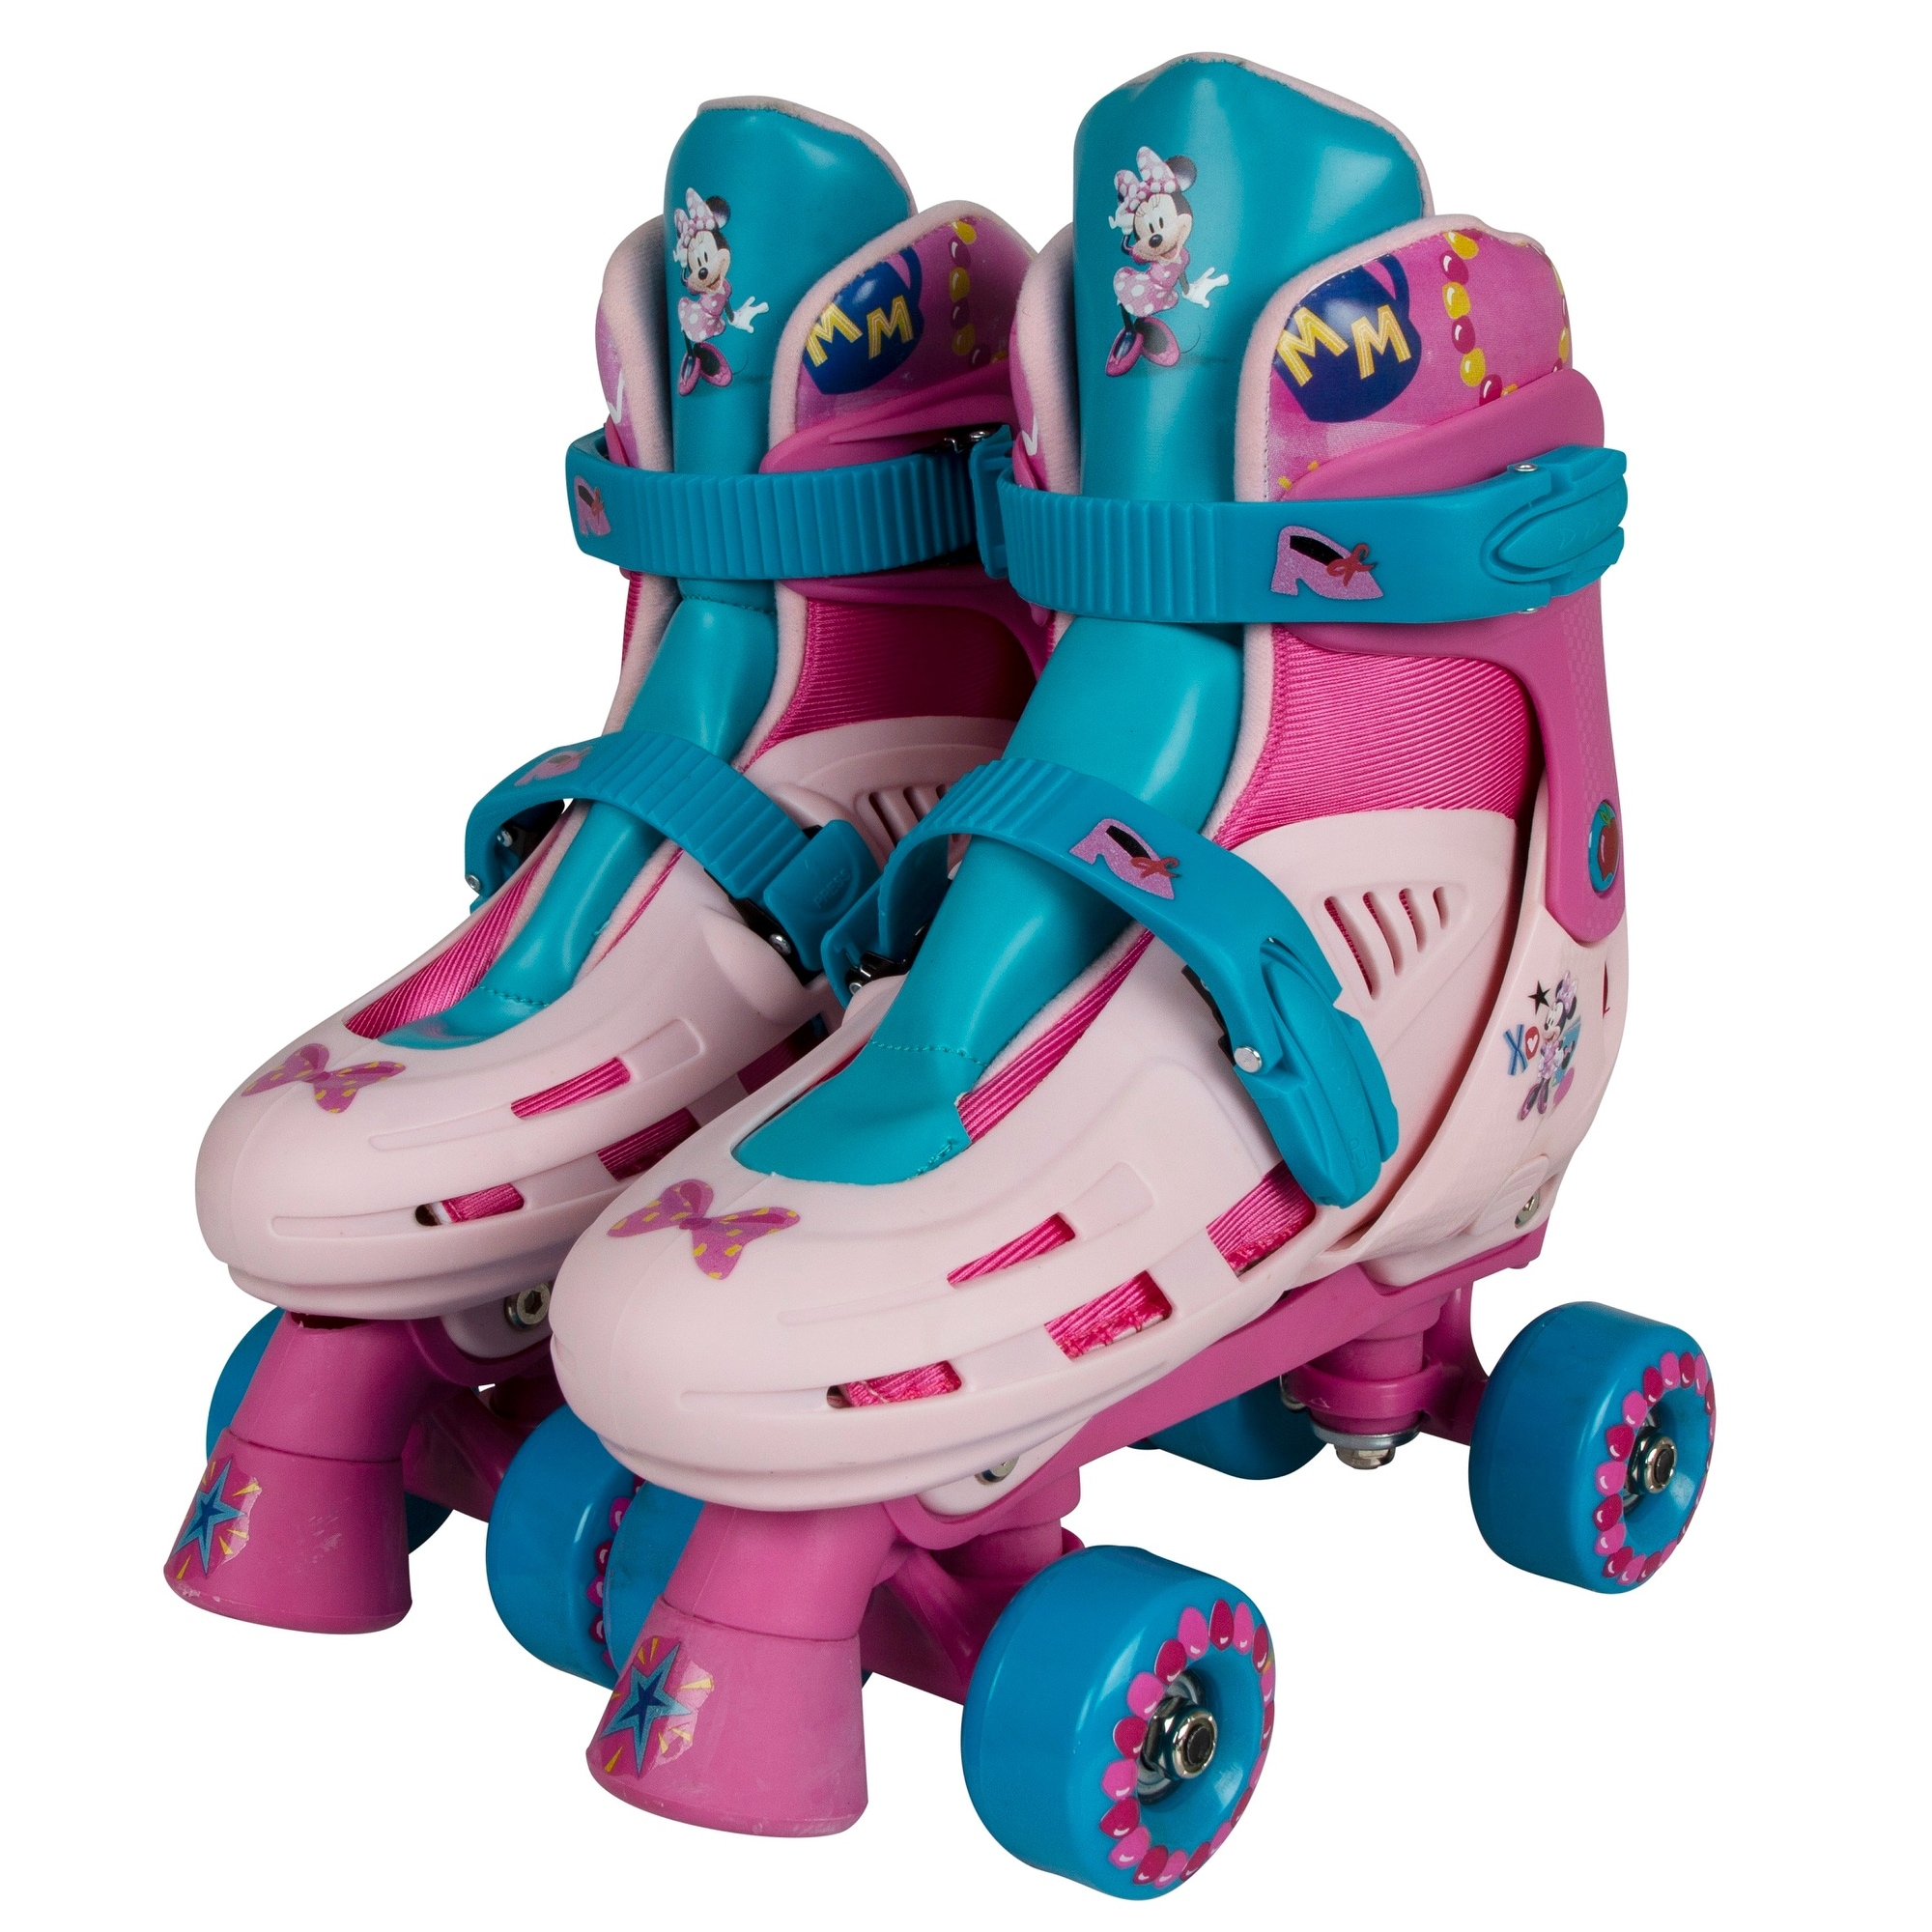 Playwheel PJ Masks Beginner Quad Roller Skates with Toe Brake 4X Adjustable